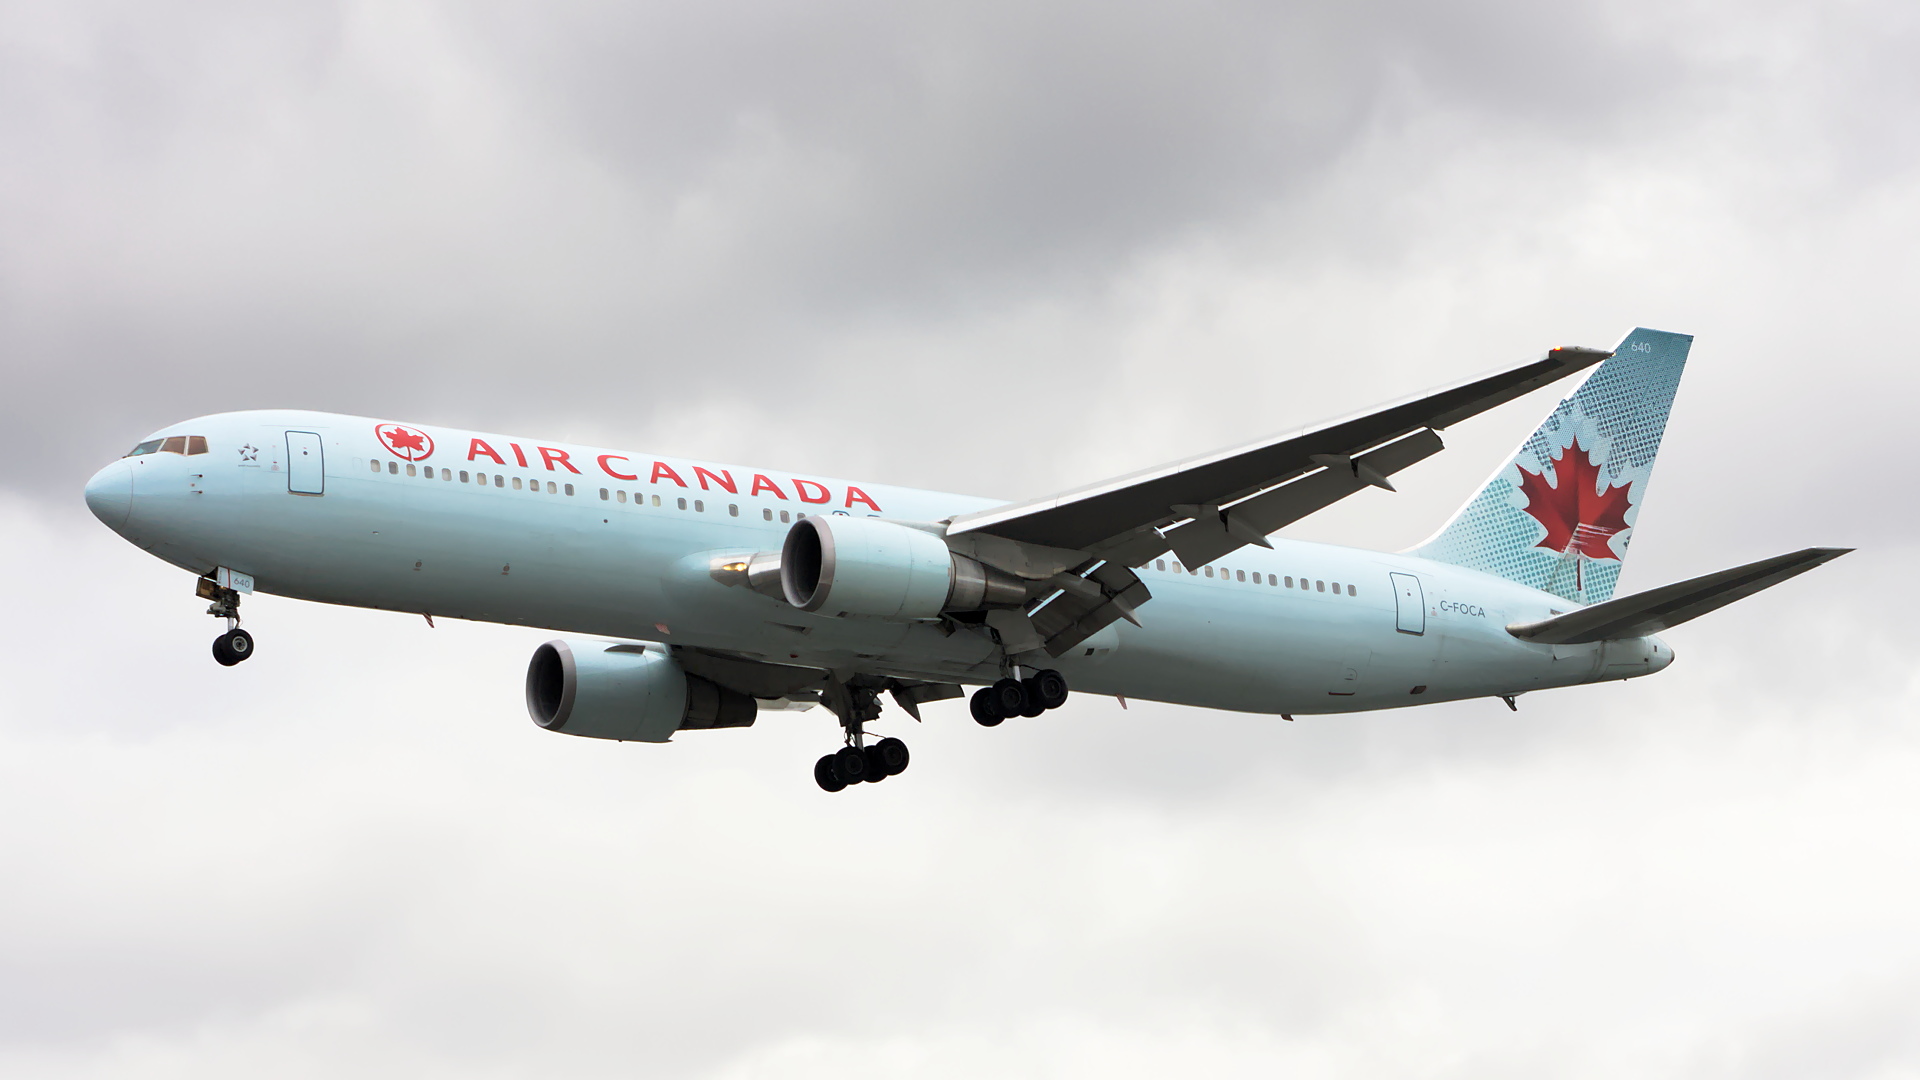 C-FOCA ✈ Air Canada Boeing 767-375ER @ London-Heathrow